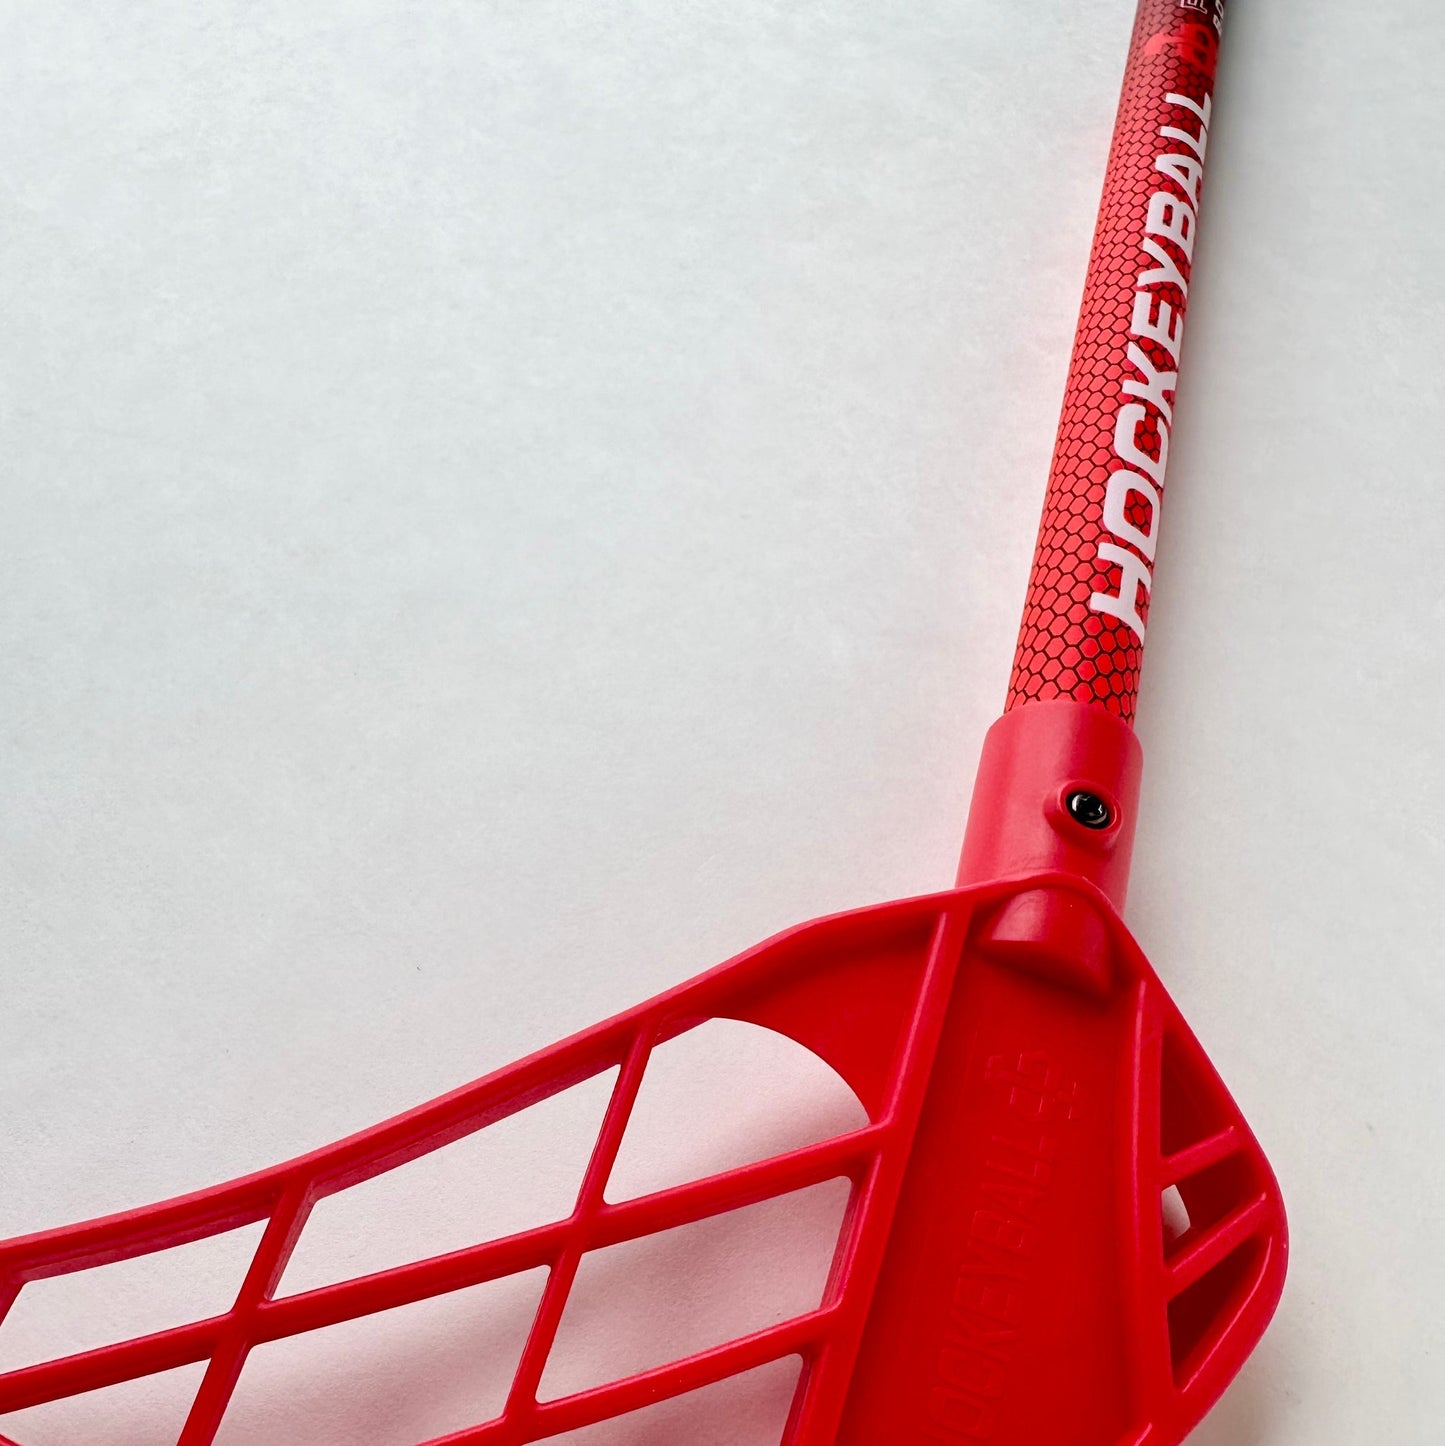 Hockeyball red stick close up